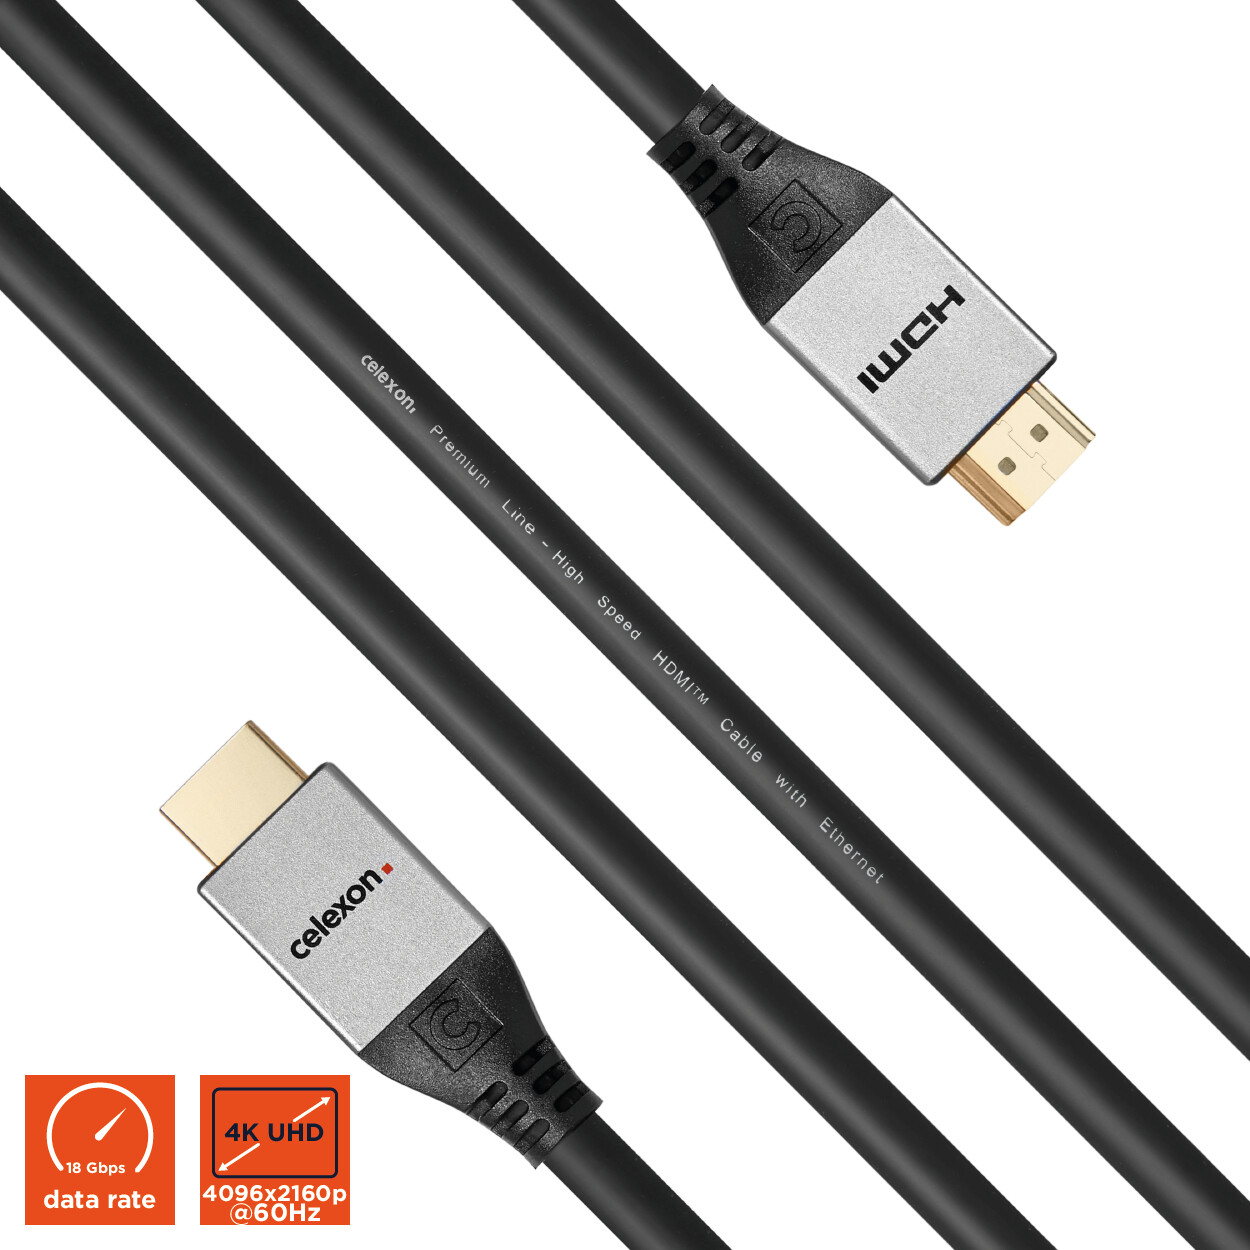 celexon-HDMI-kabel-met-Ethernet-2-0a-b-4K-2-0m-Professional